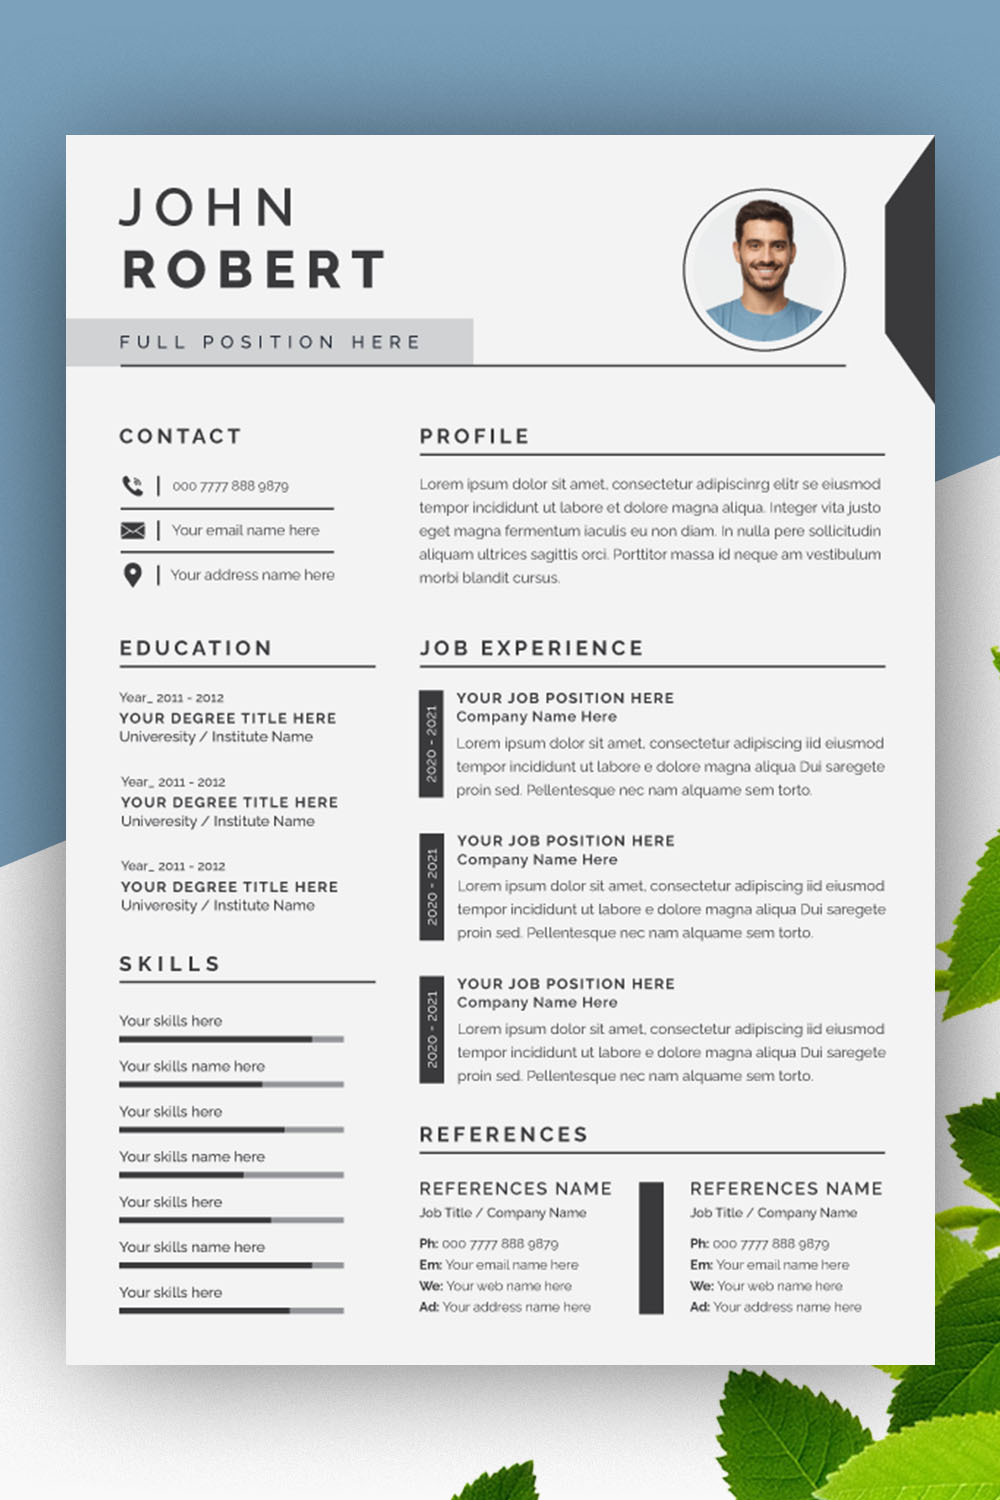 Modern Professional Resume Layout CV Design pinterest preview image.